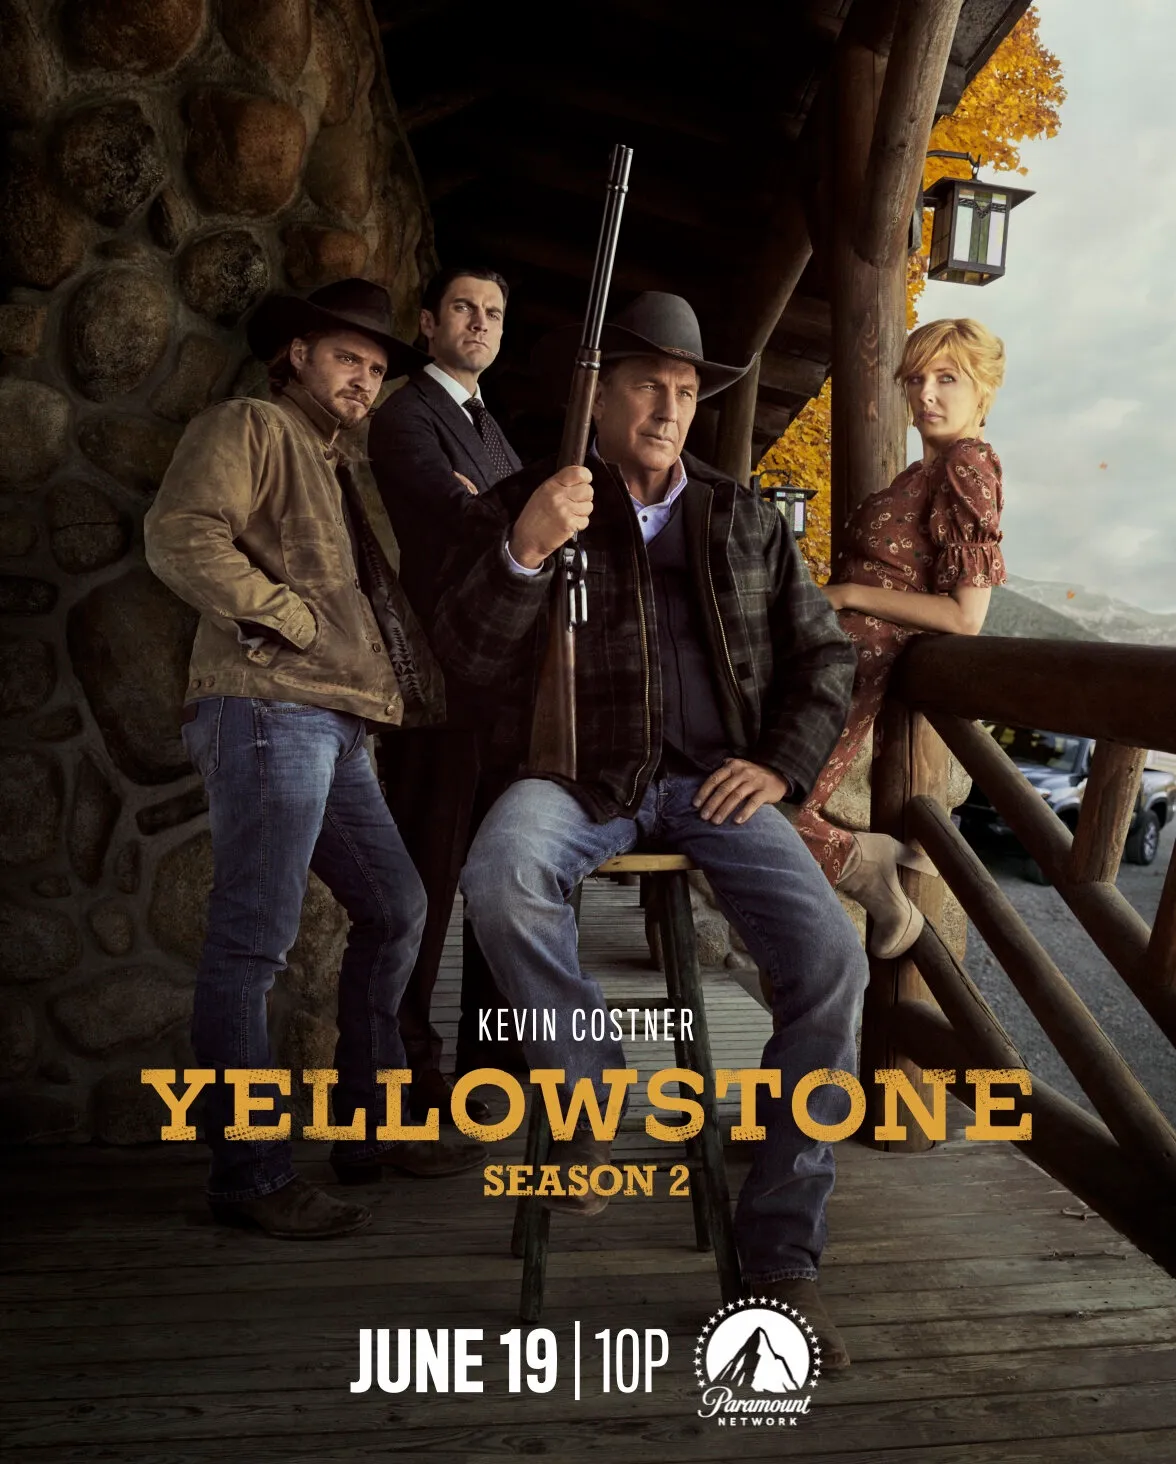 Yellowstone Season 2 / Йелоустоун Сезон 2 (2019) Филм онлайн